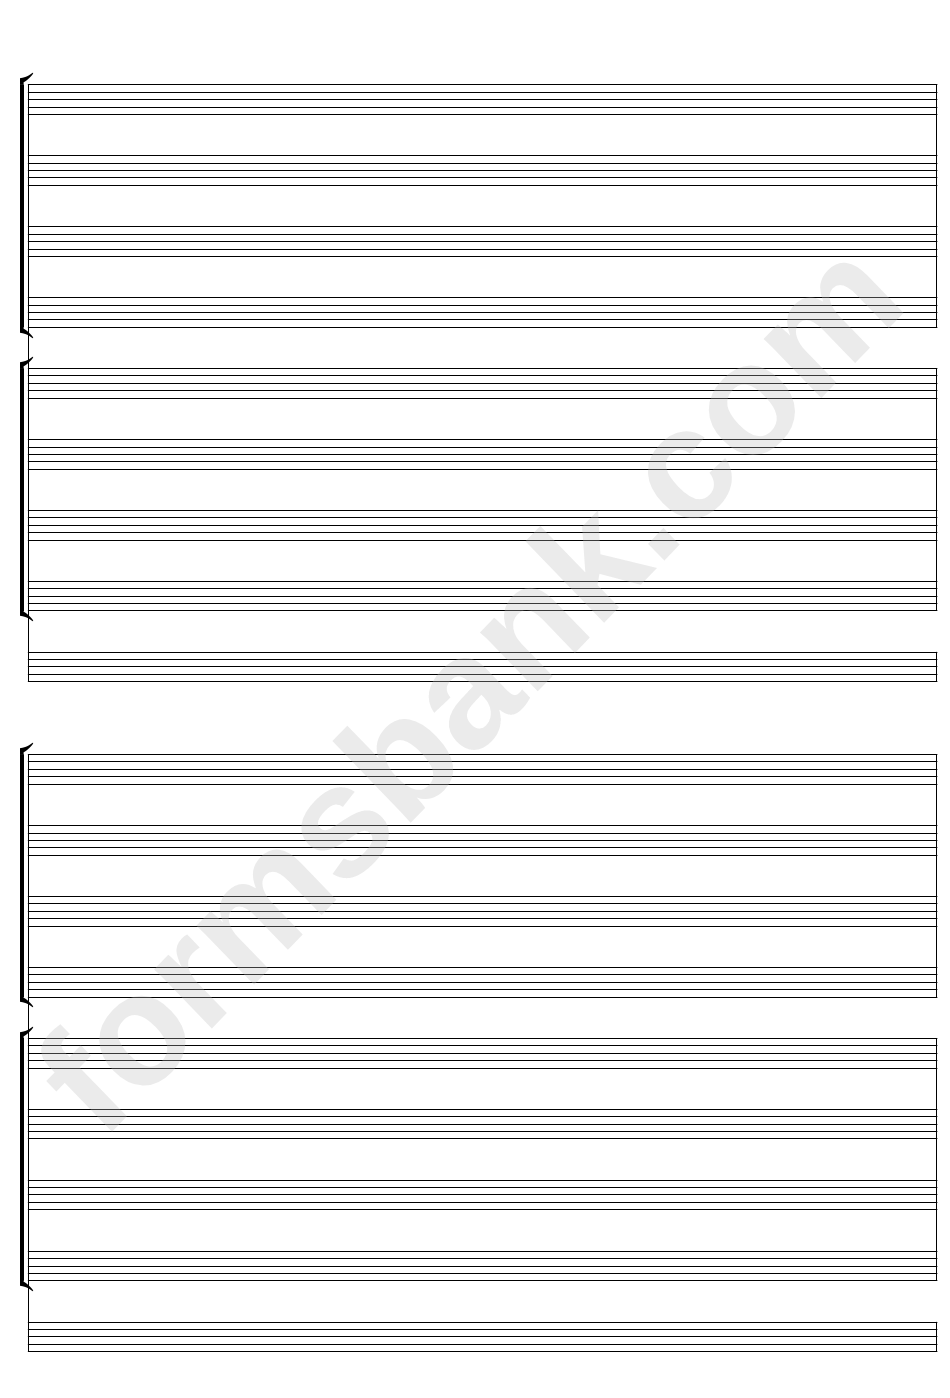 Nine Instrument Band Blank Staff Paper